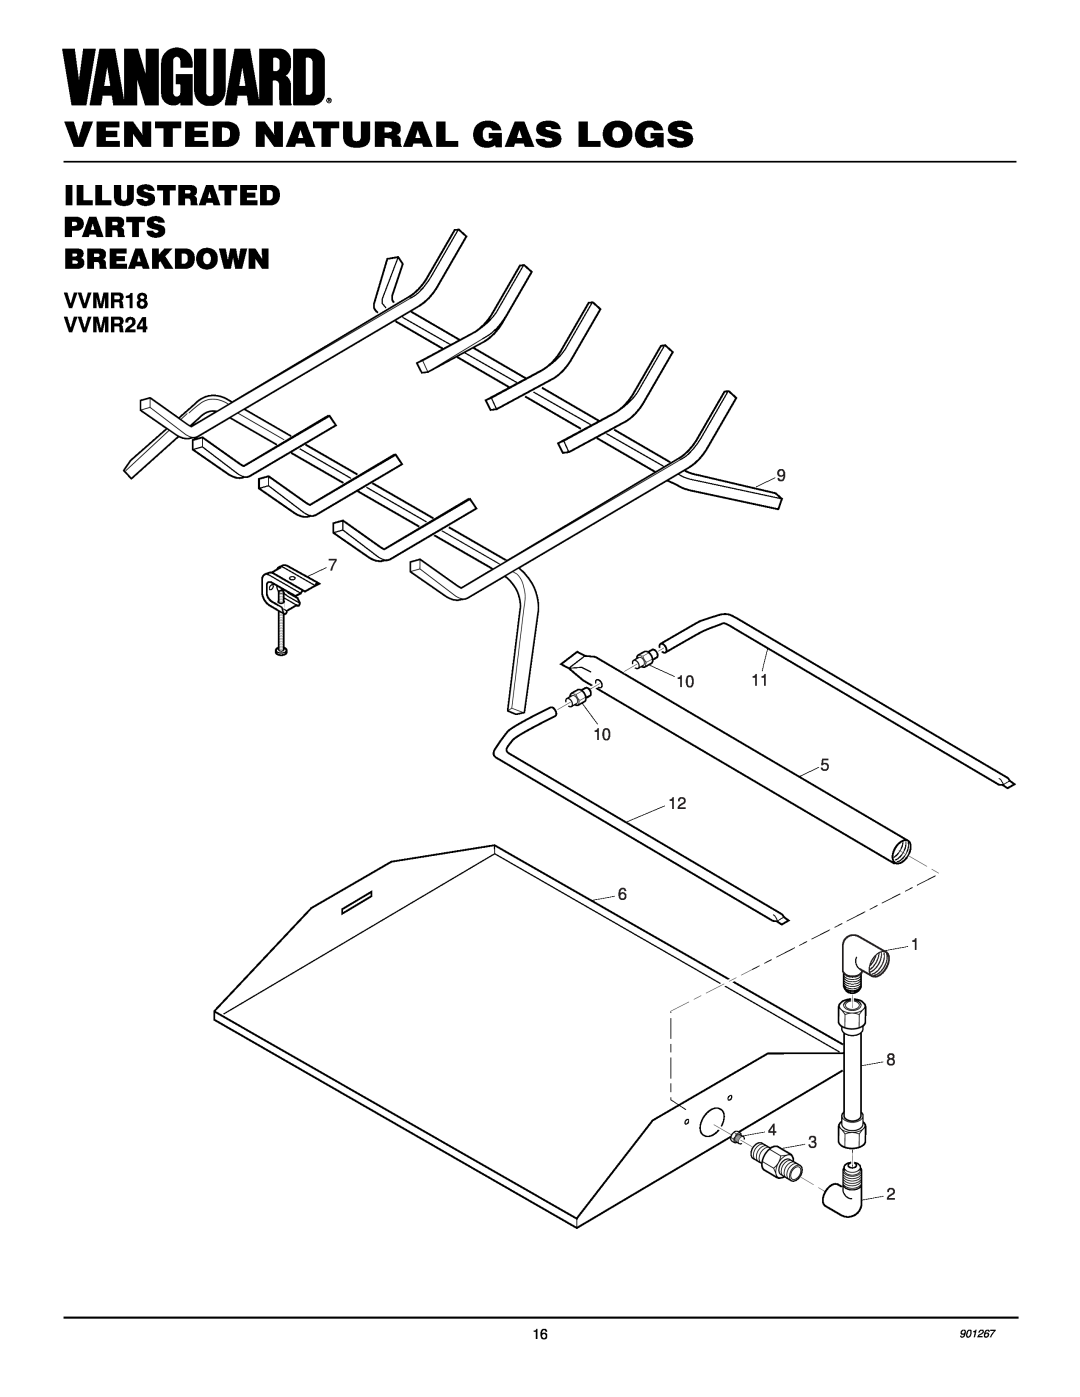 Desa installation manual Illustrated Parts Breakdown, Vented Natural Gas Logs, VVMR18 VVMR24, 901267 